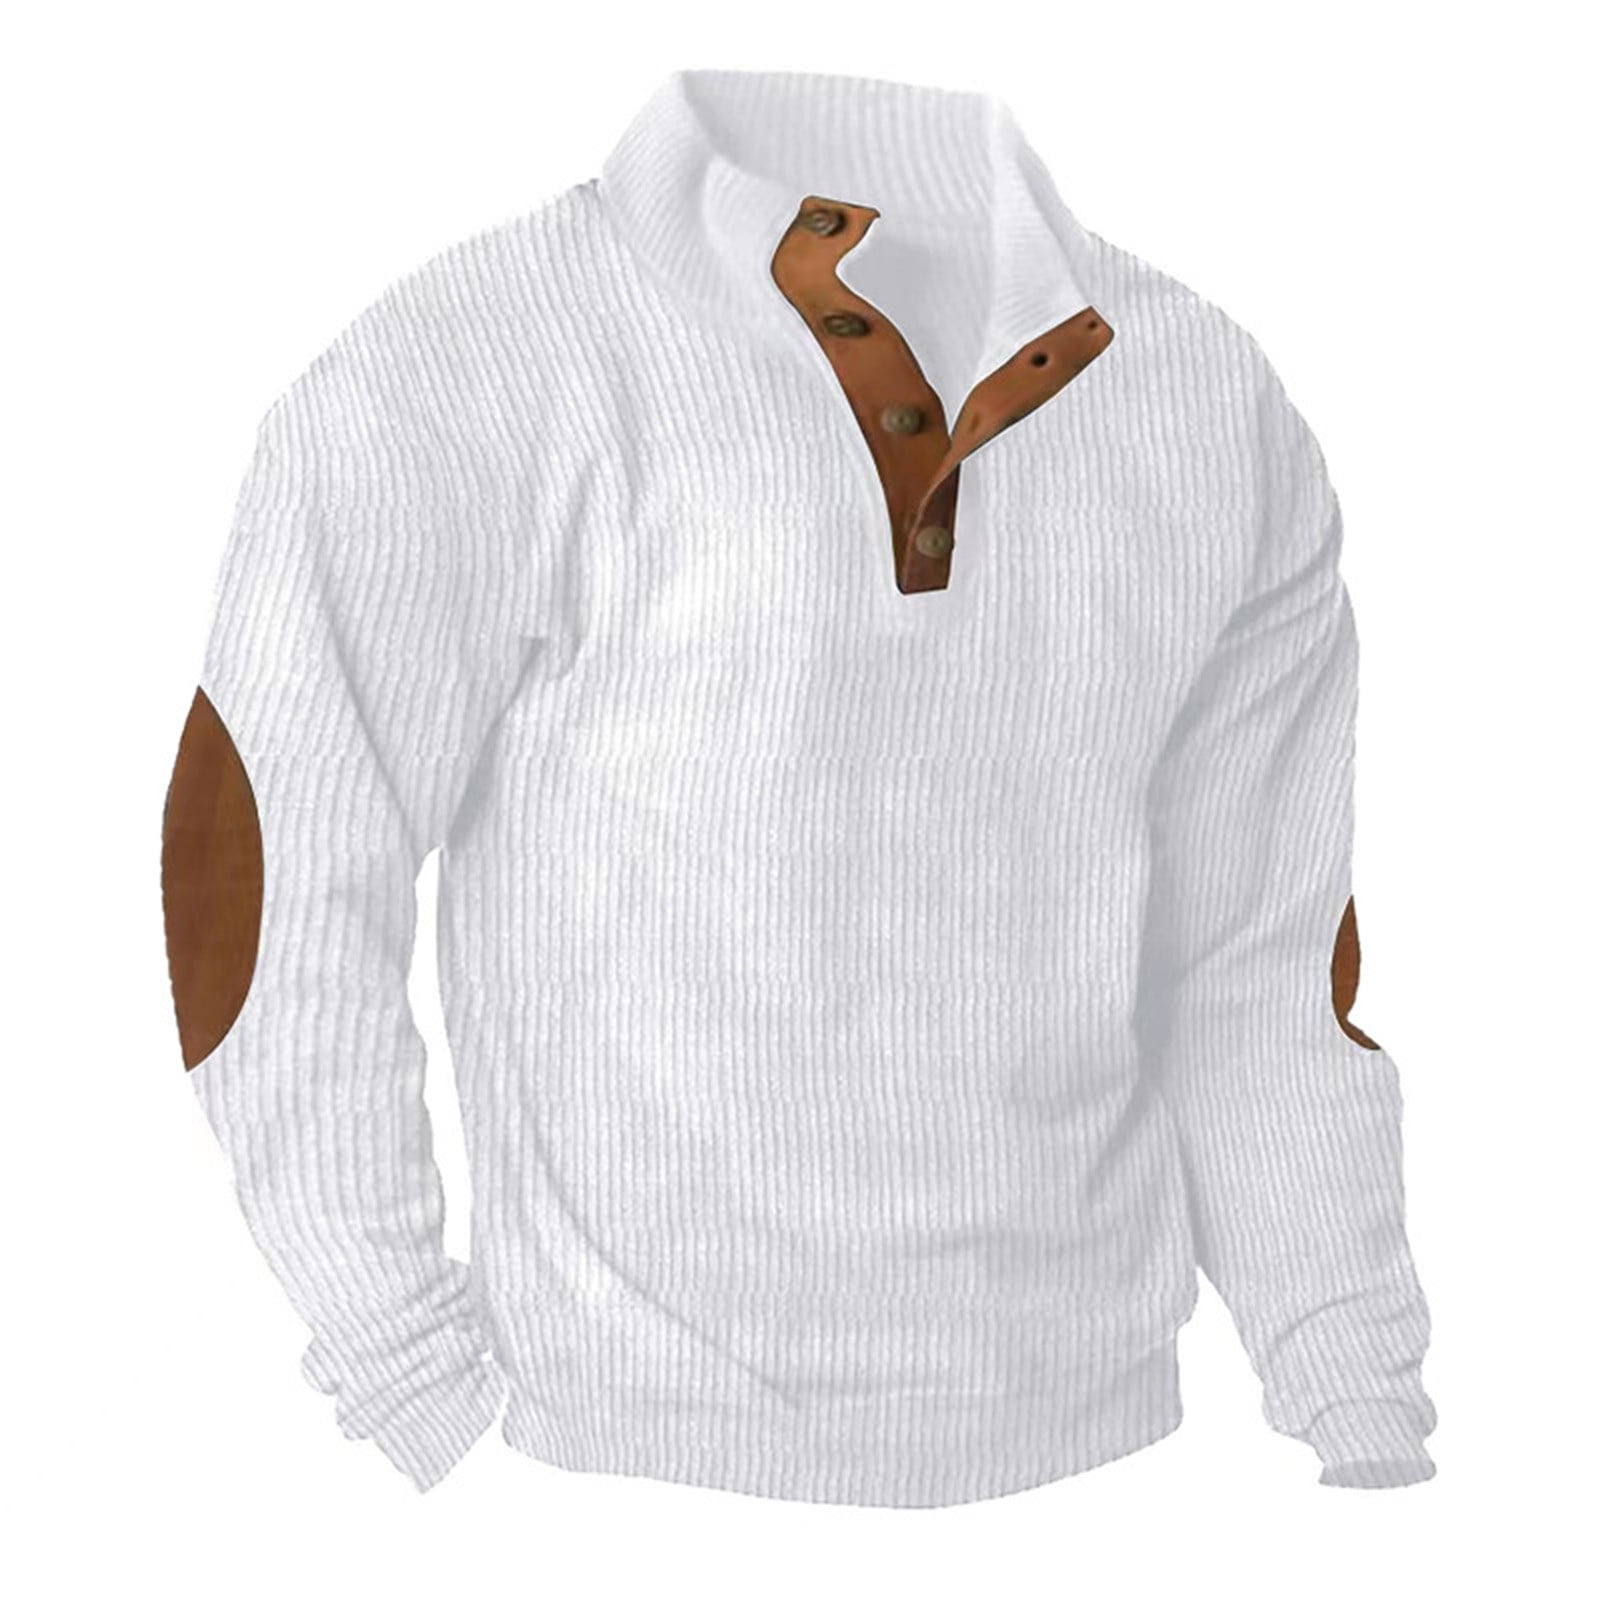 ASEIDFNSA Corduroy Sweatshirt Vintage Top for Men Long Sleeve Plus Size ...